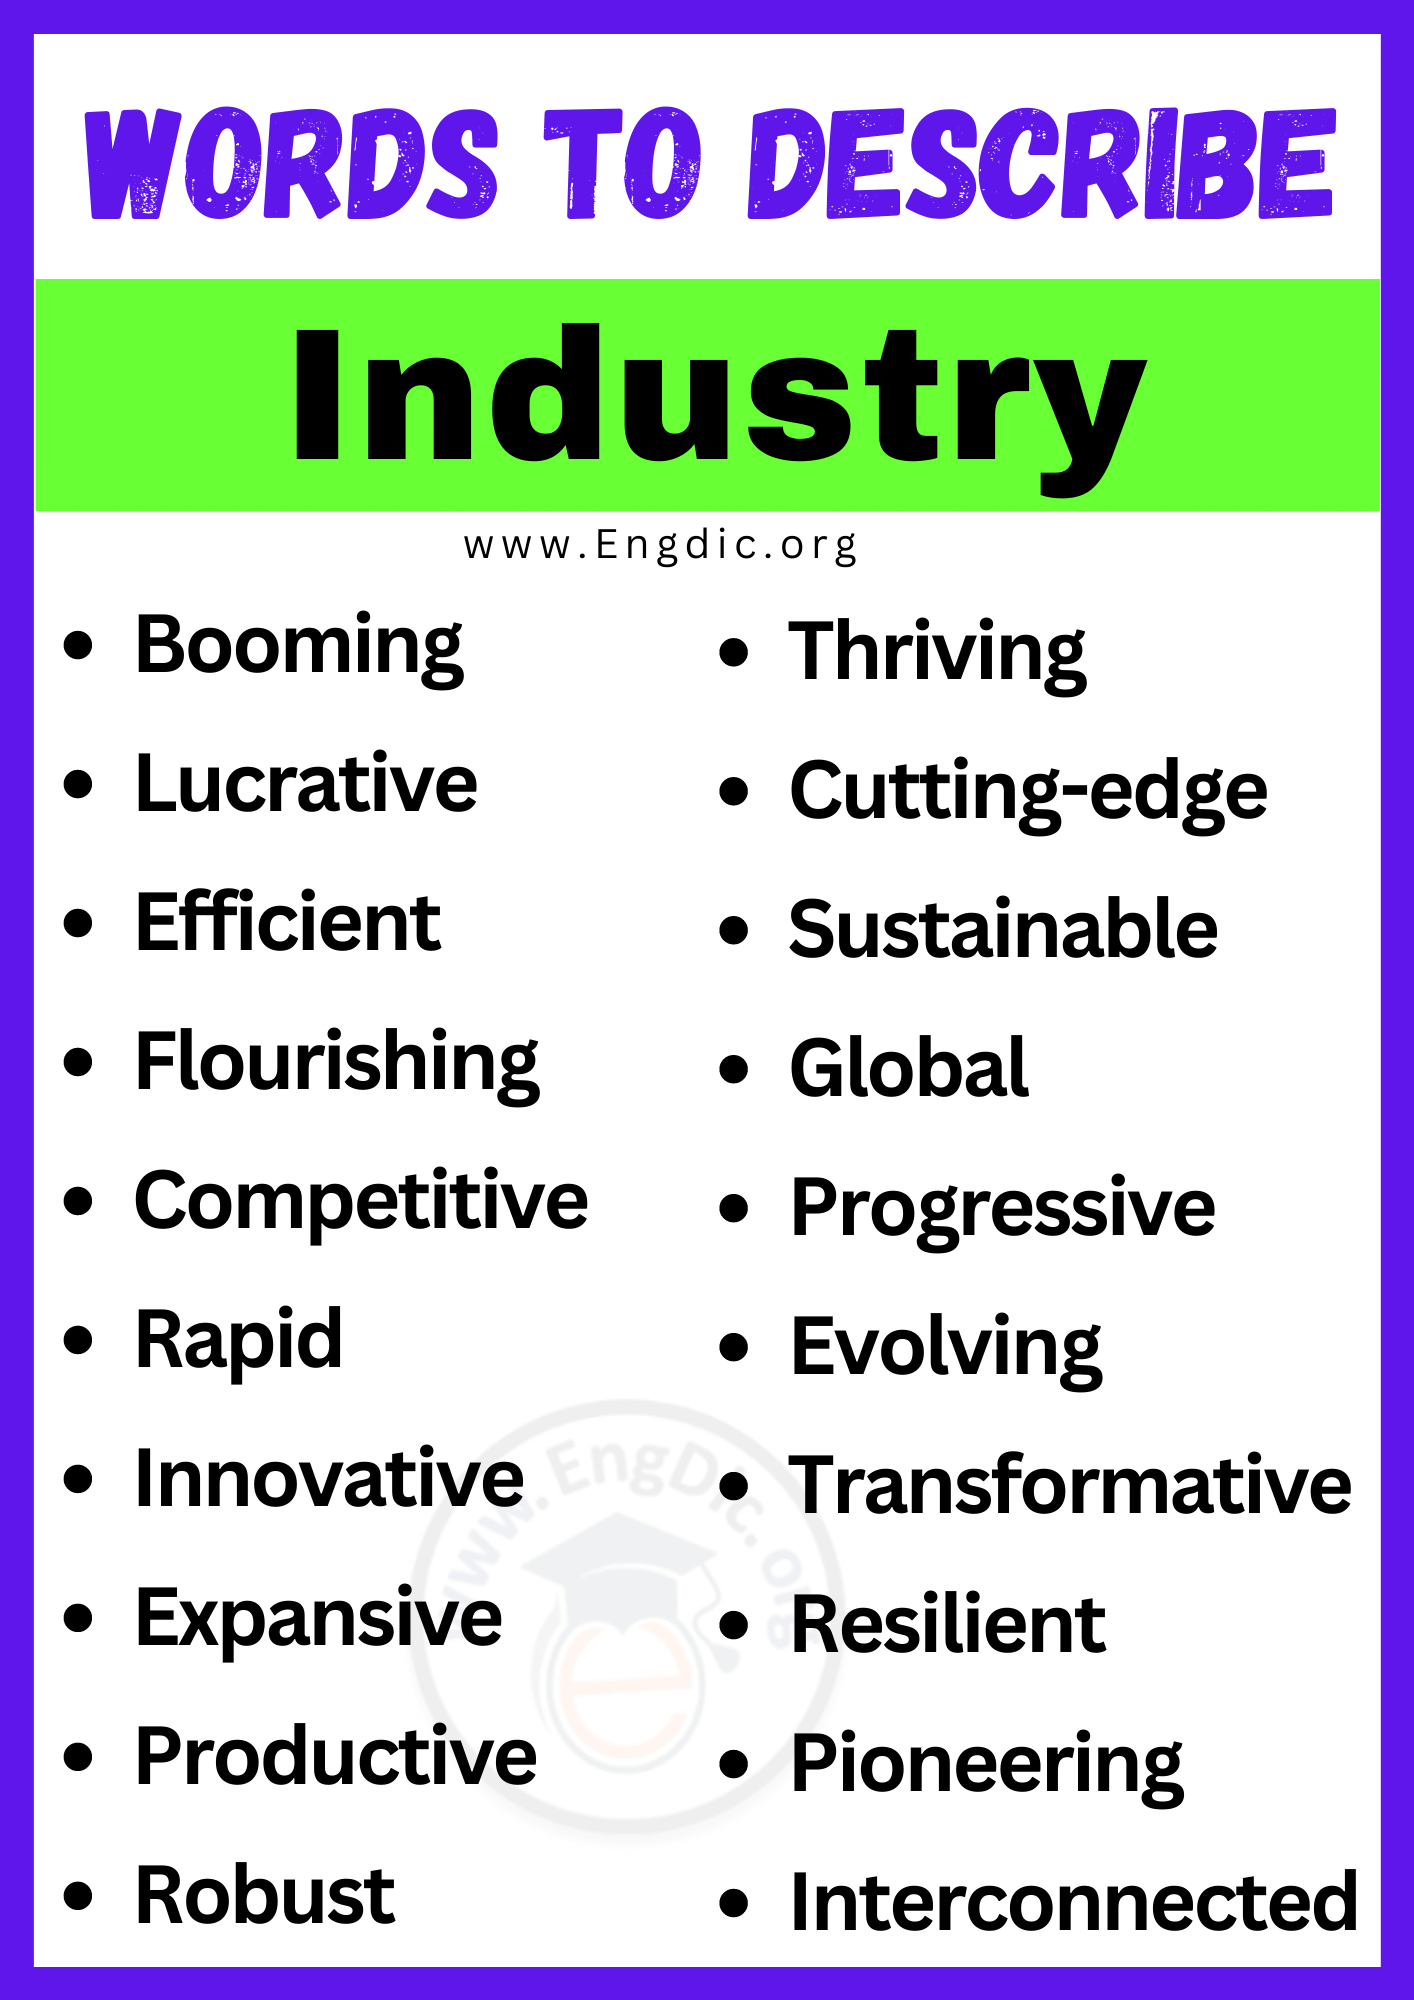 Words to Describe Industry